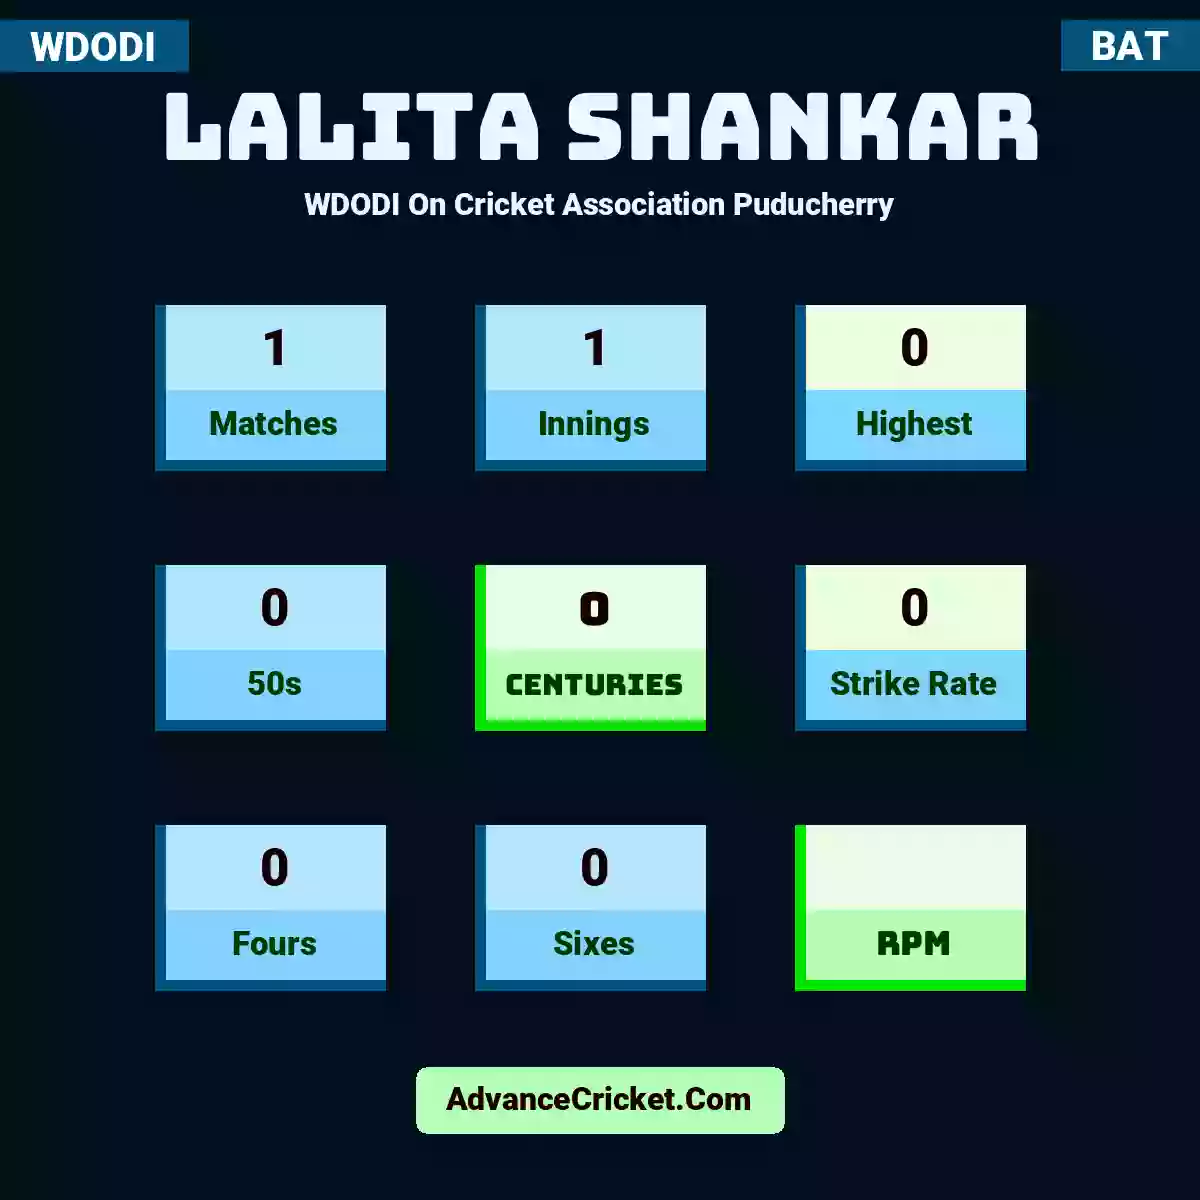 Lalita Shankar WDODI  On Cricket Association Puducherry, Lalita Shankar played 1 matches, scored 0 runs as highest, 0 half-centuries, and 0 centuries, with a strike rate of 0. L.Shankar hit 0 fours and 0 sixes.